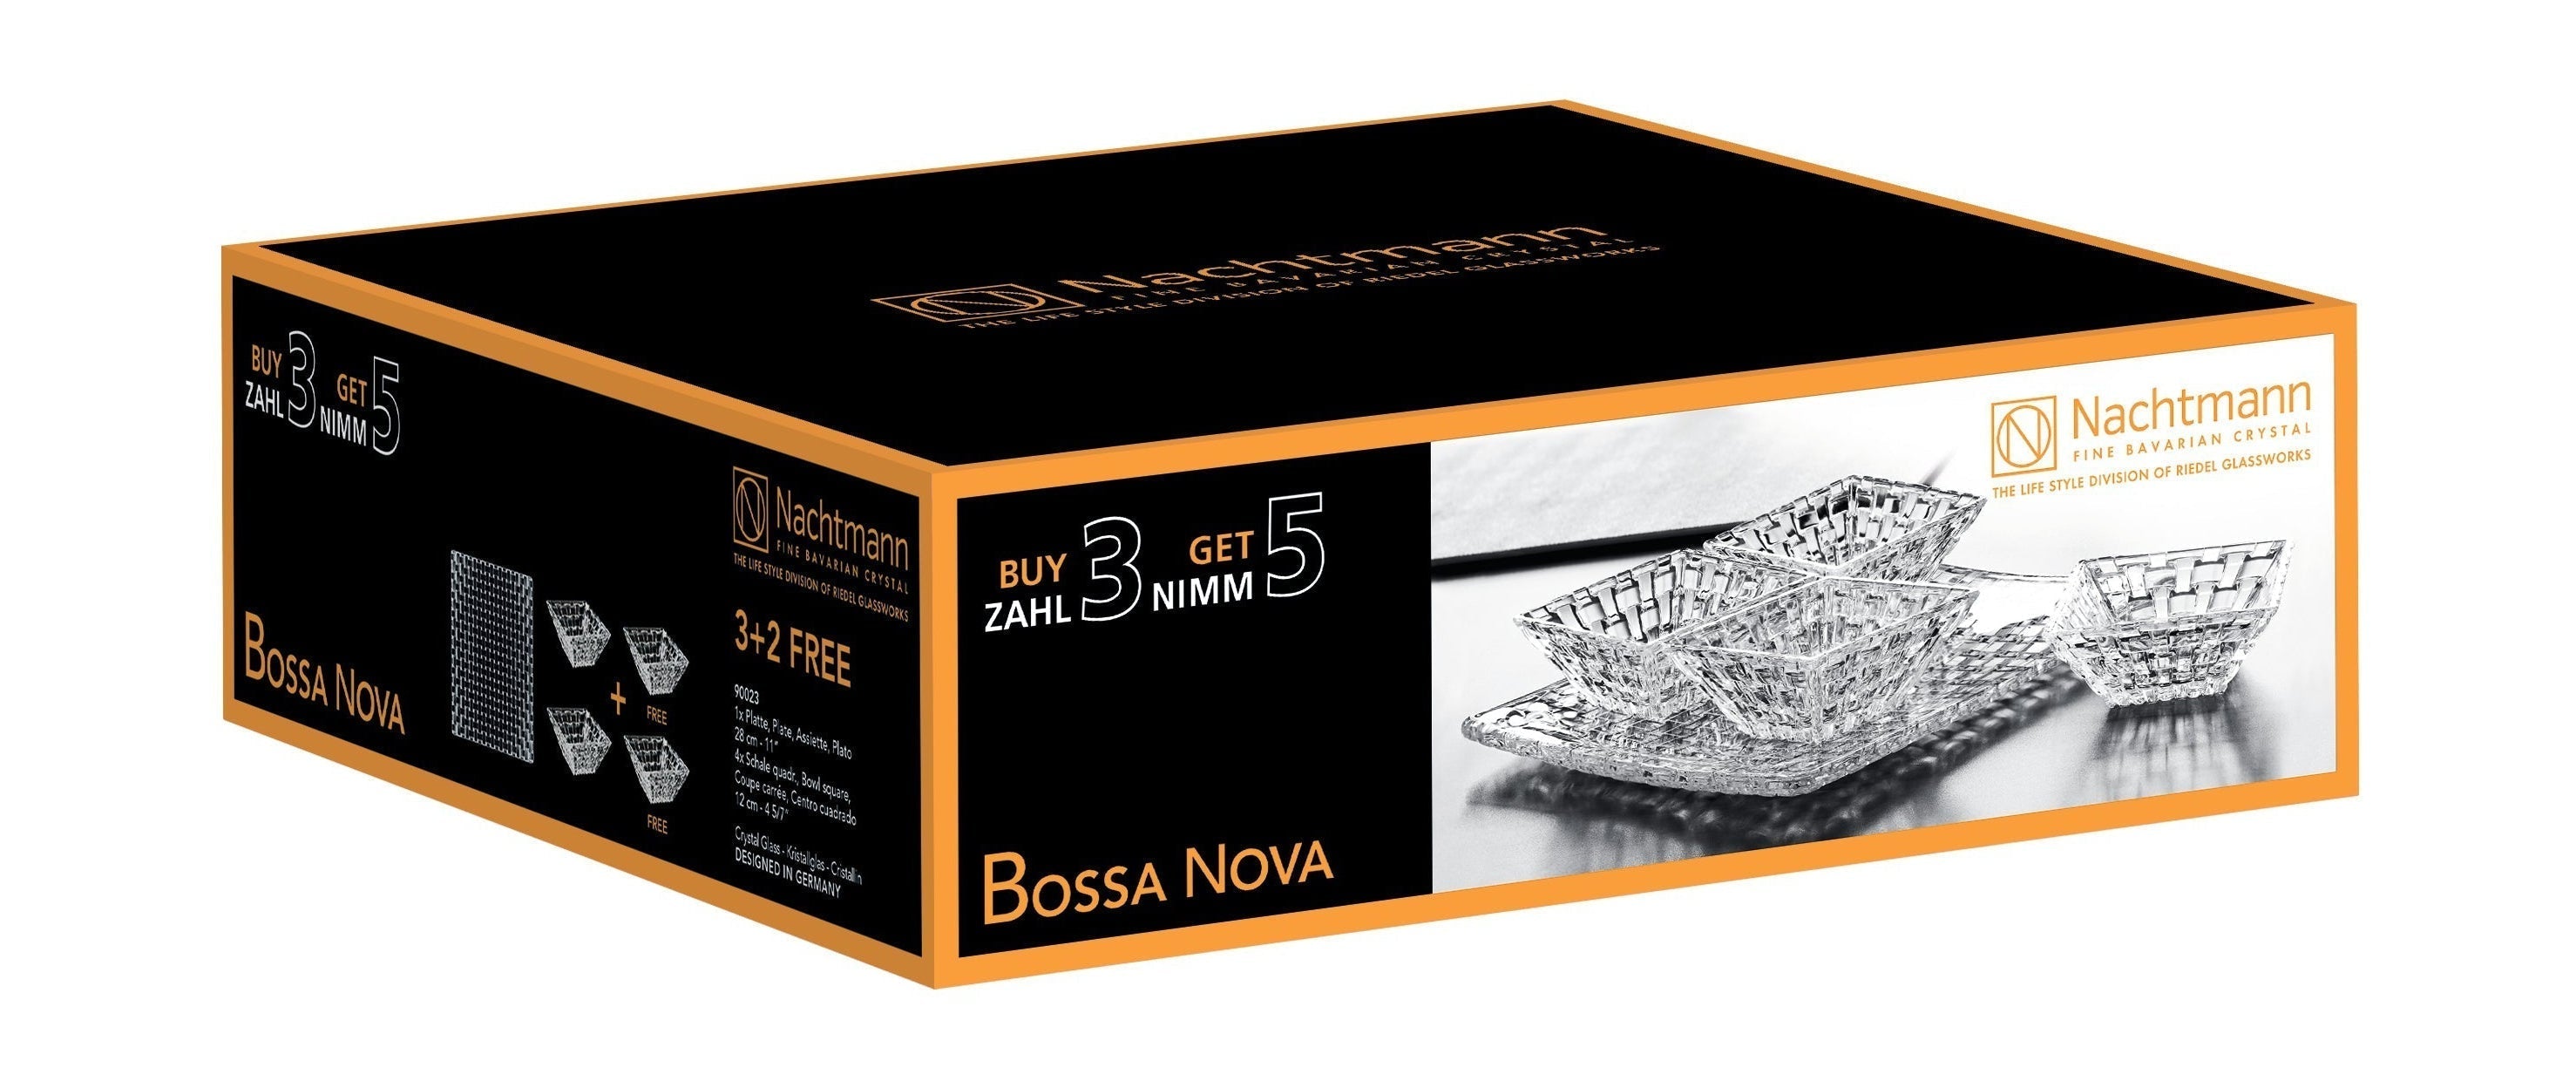 Nachtmann Bossa Nova Plate og Bowl Advantage Set, sett af 5